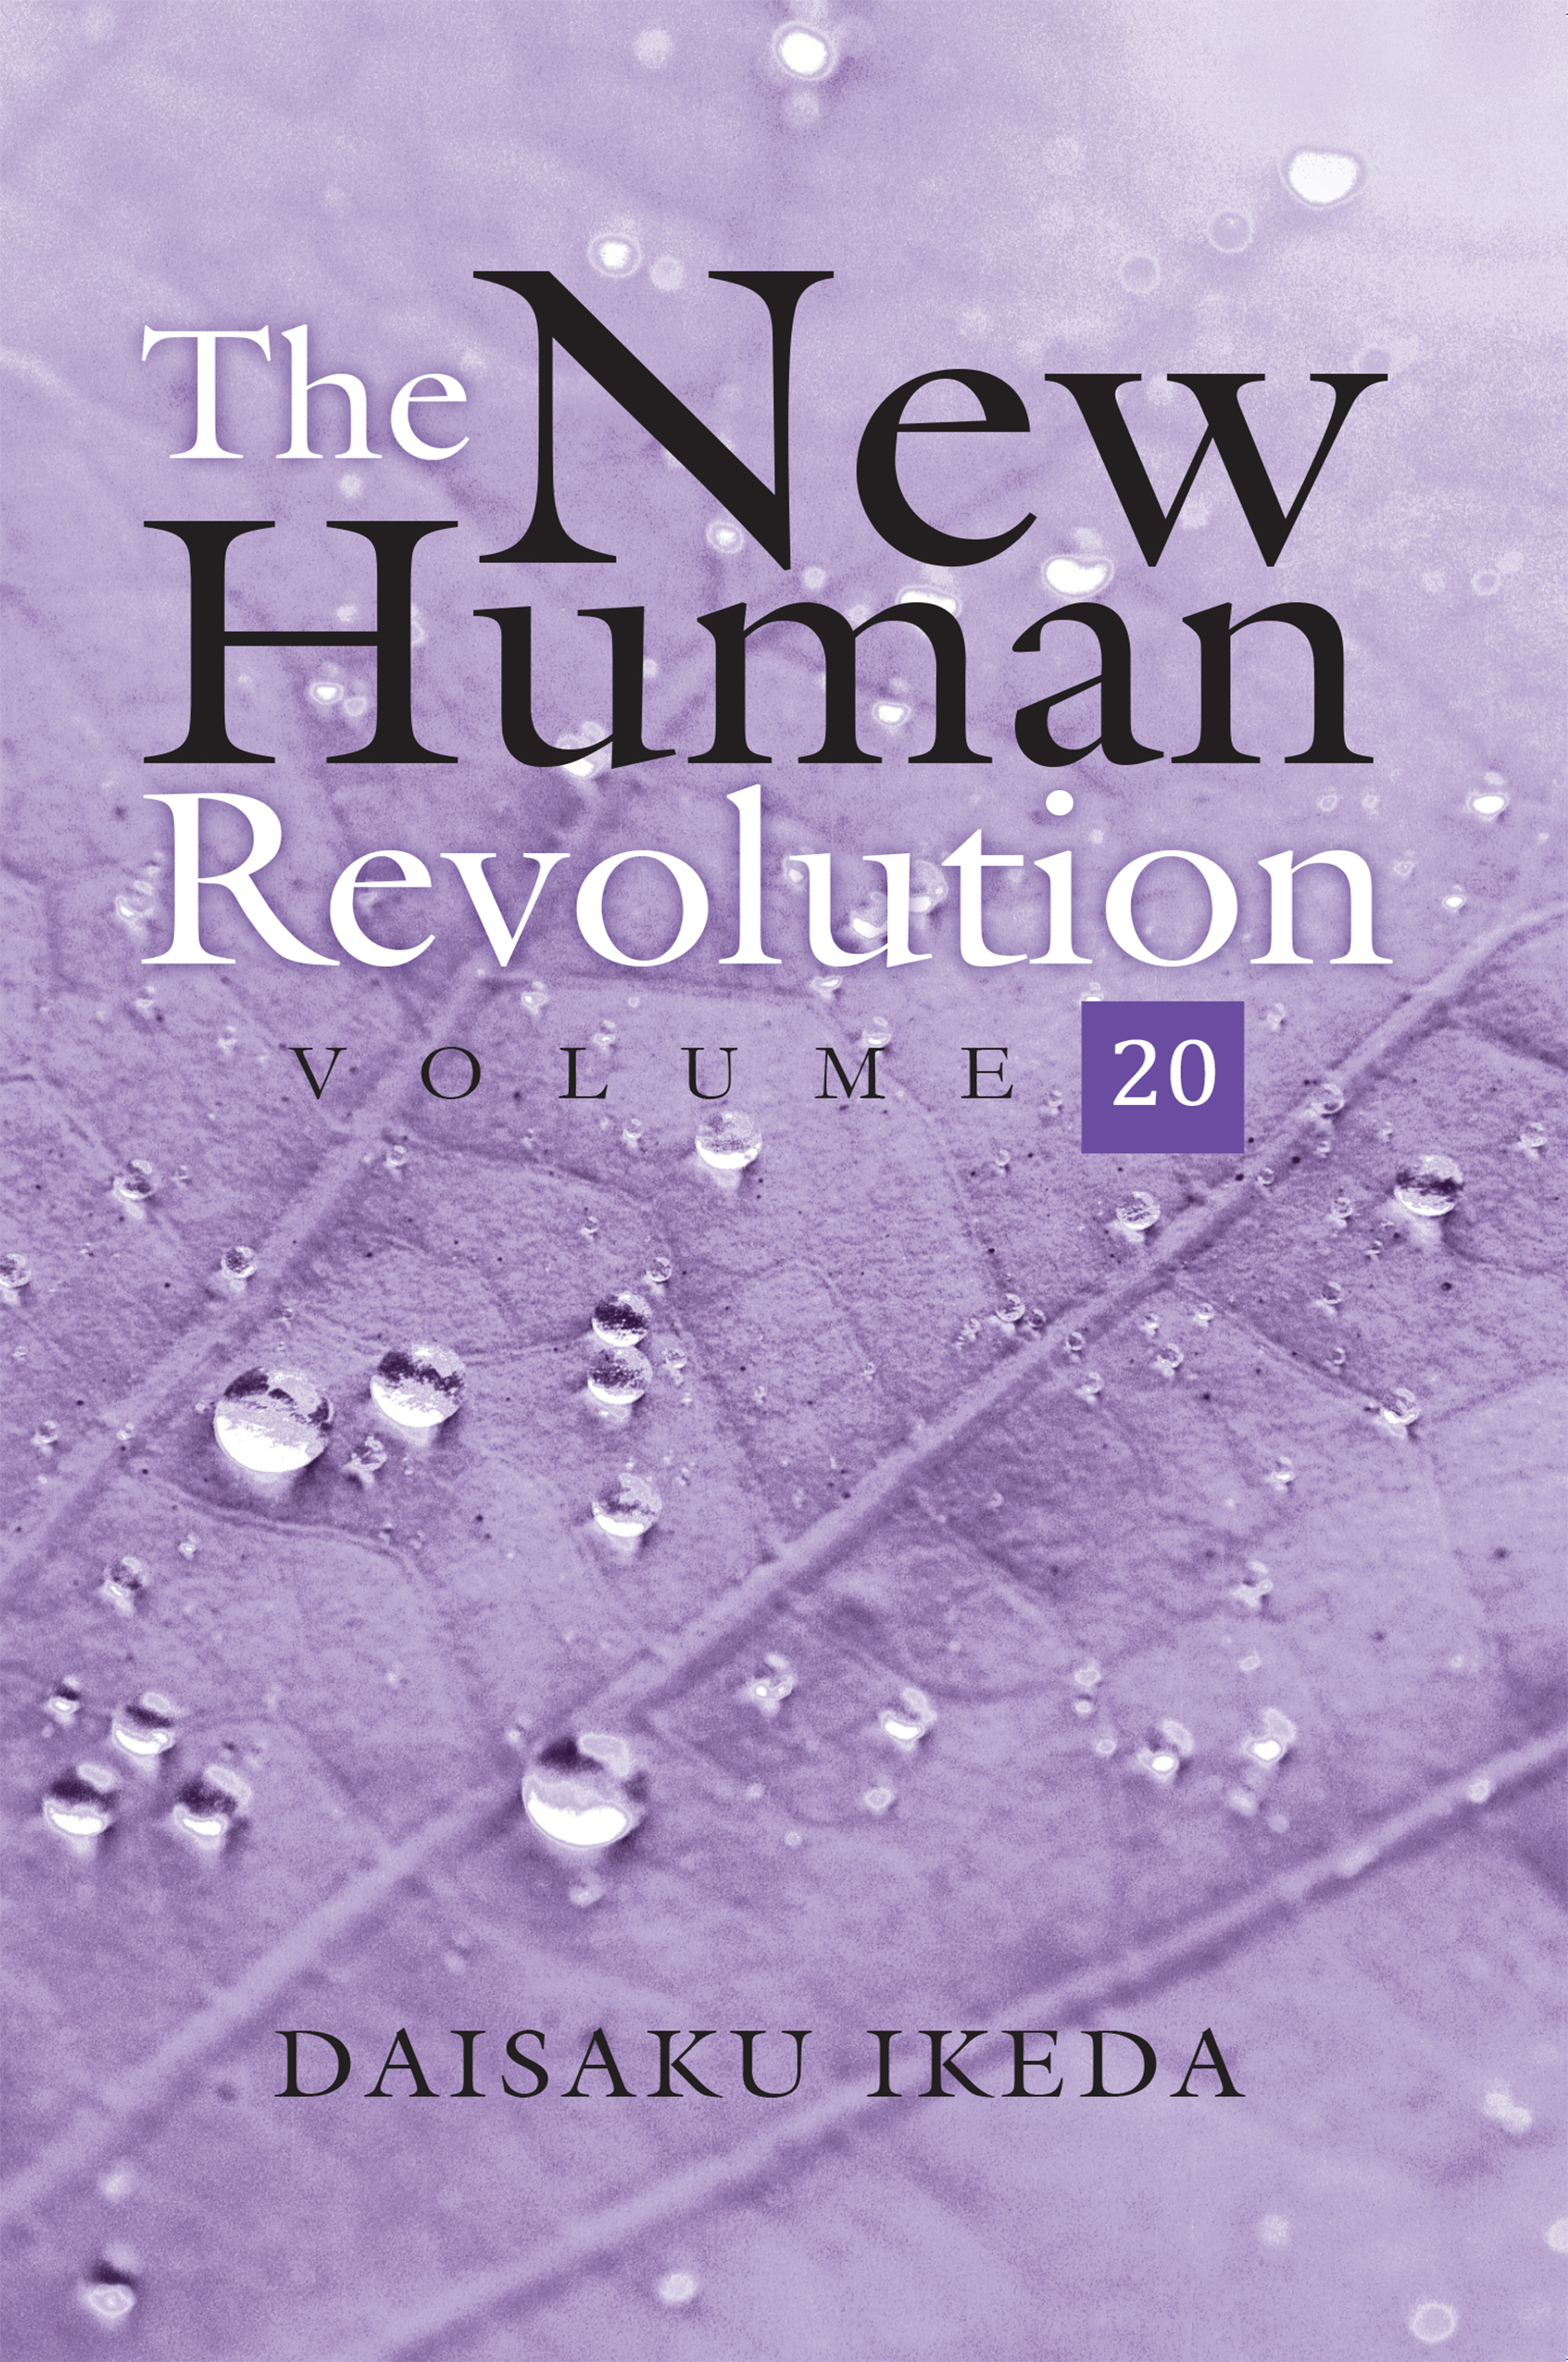 THE NEW HUMAN REVOLUTION VOL 20